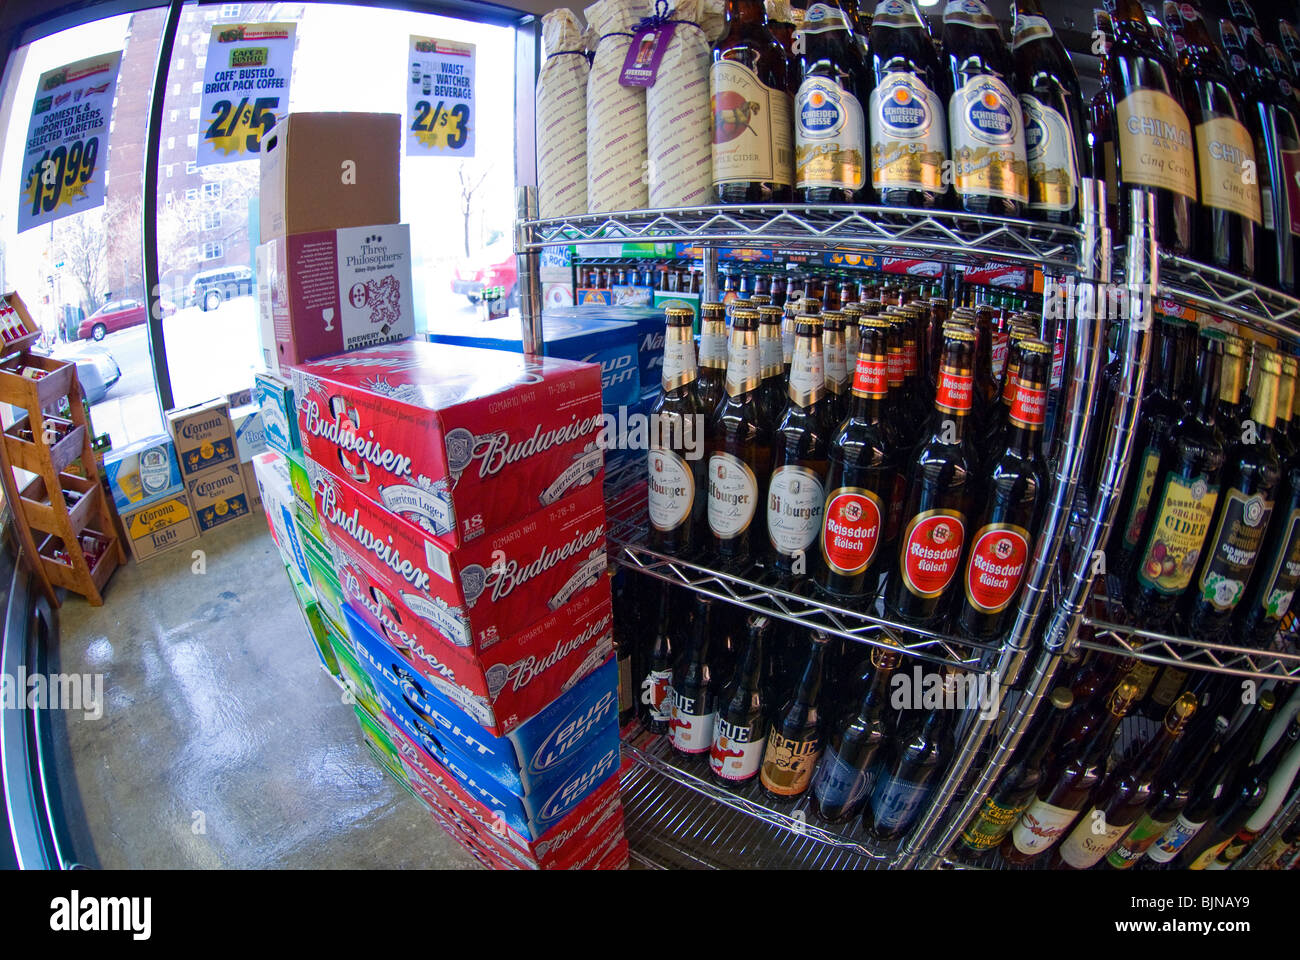 https://c8.alamy.com/comp/BJNAY9/a-supermarket-beer-department-seen-on-friday-march-26-2010-richard-BJNAY9.jpg